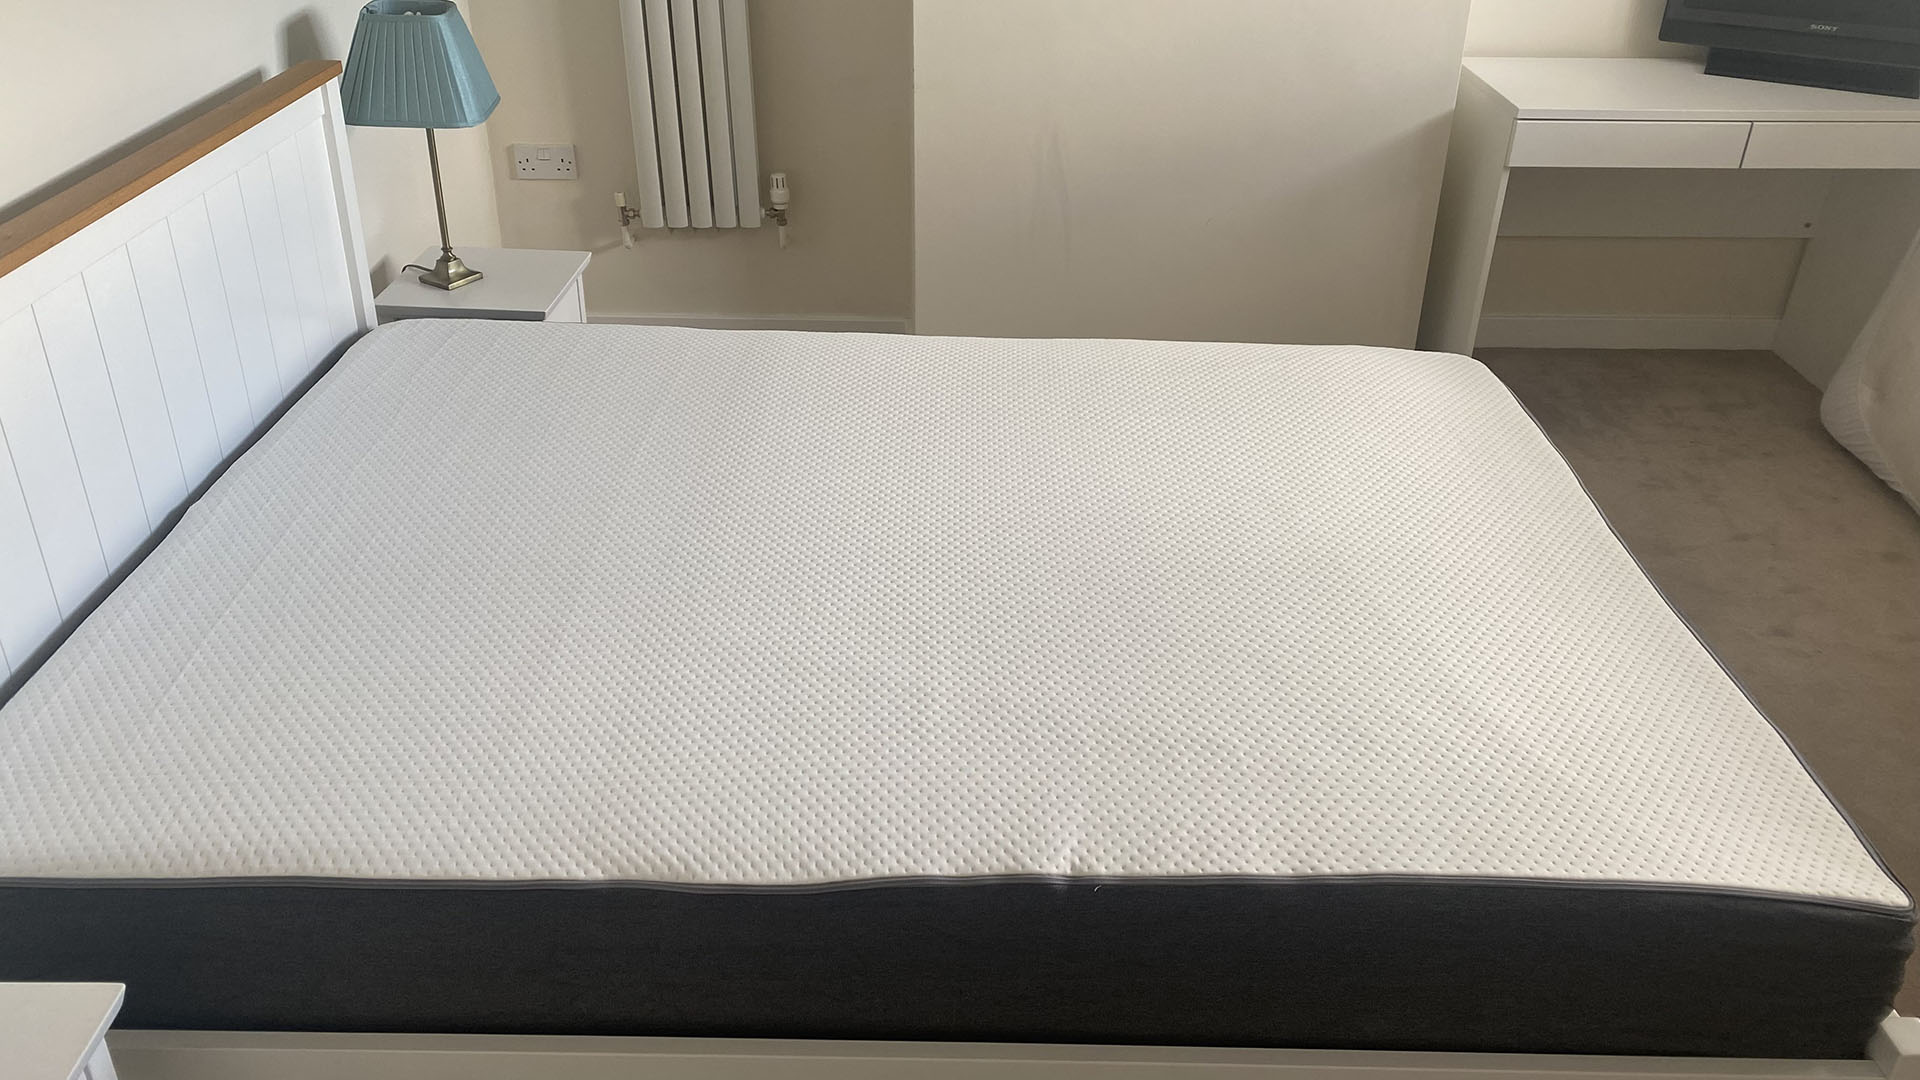 Otty Original Hybrid mattress in a bedroom